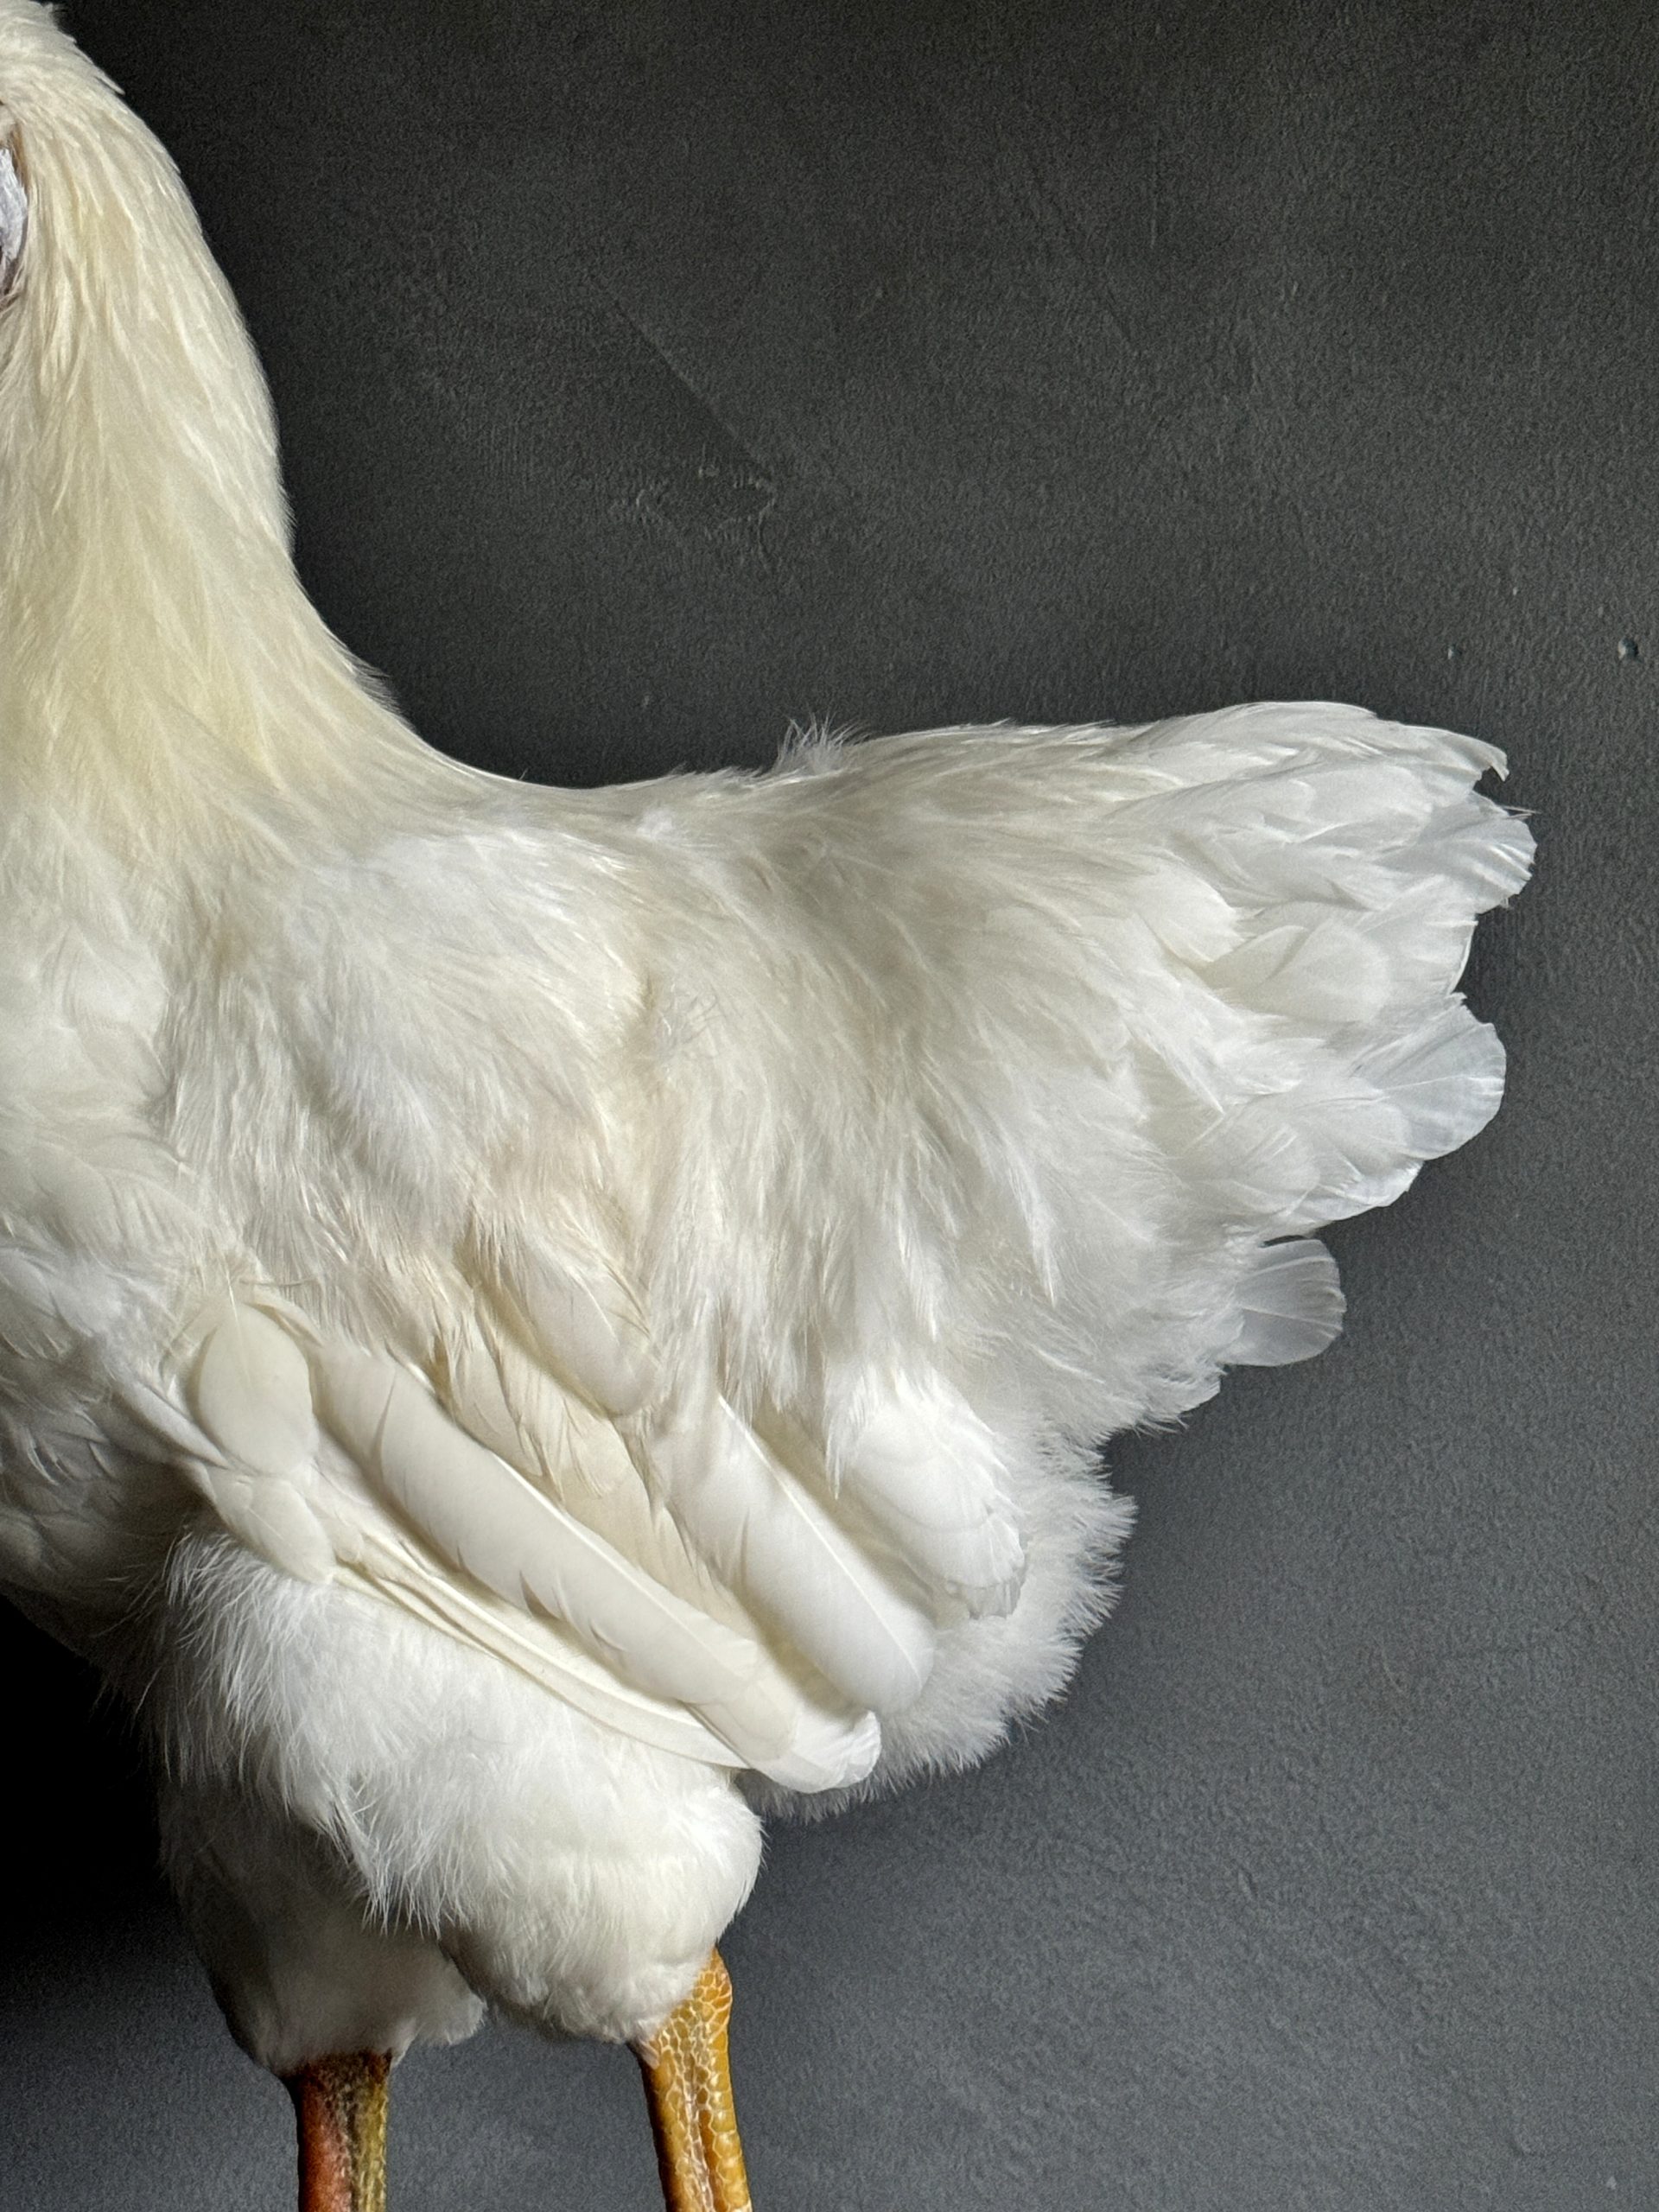 Opgezette witte kip